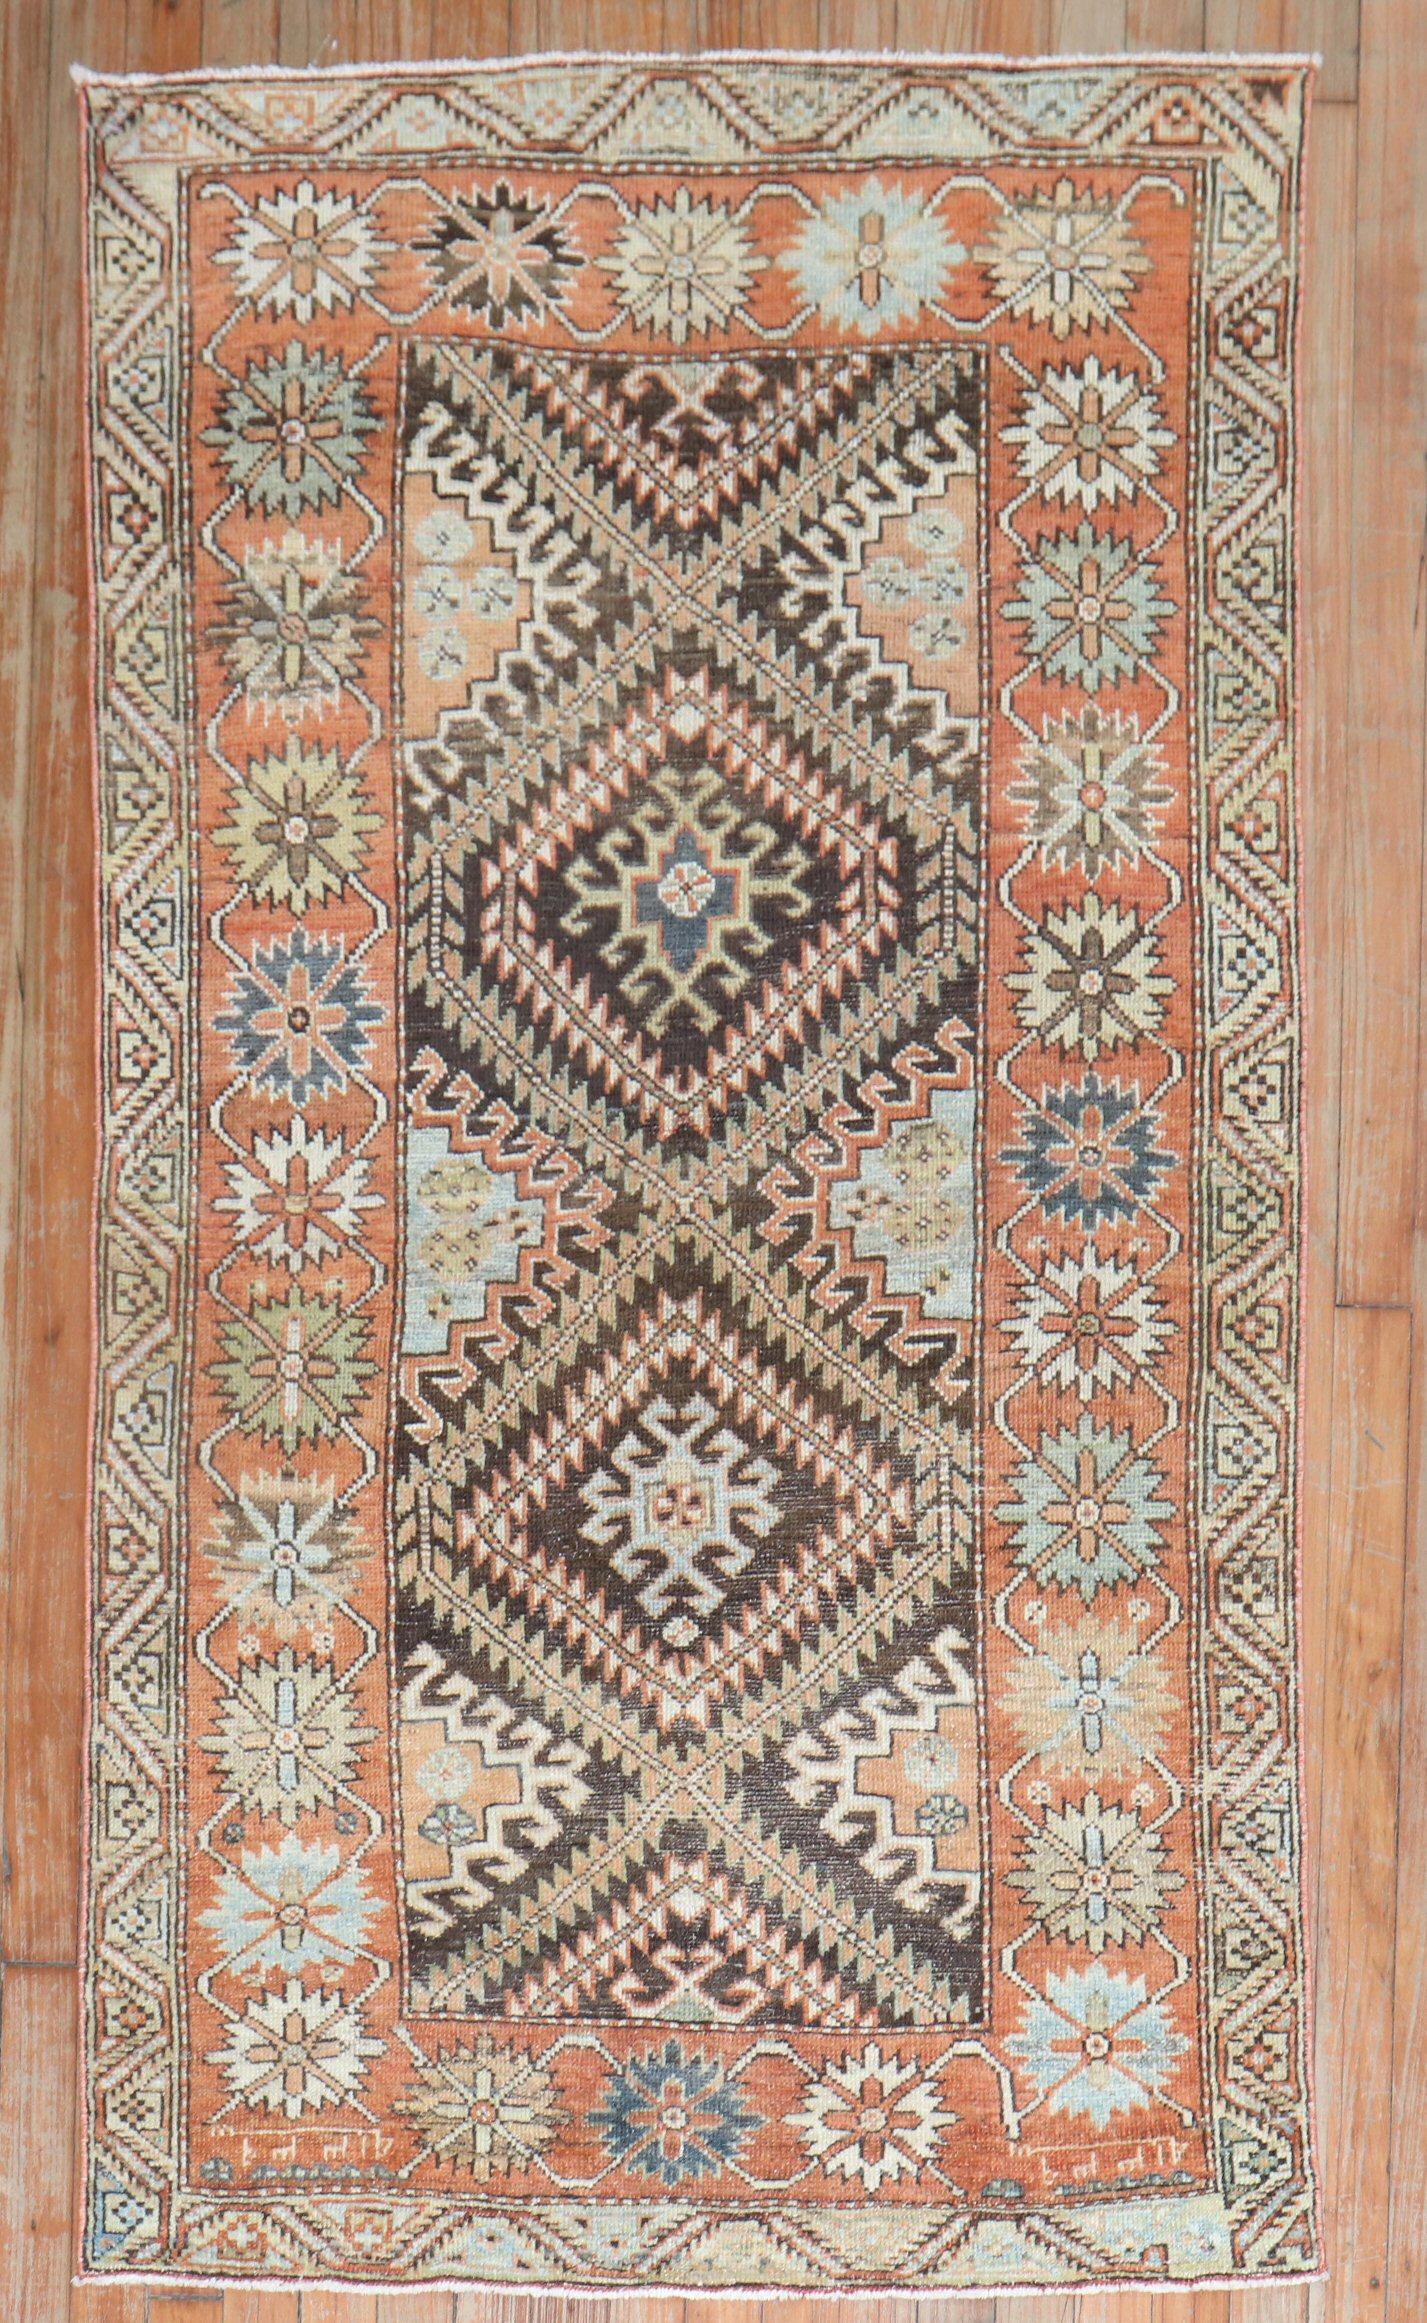 Early 20th-century Kurdish Tribal rug

 Measures: 3' x 5'6